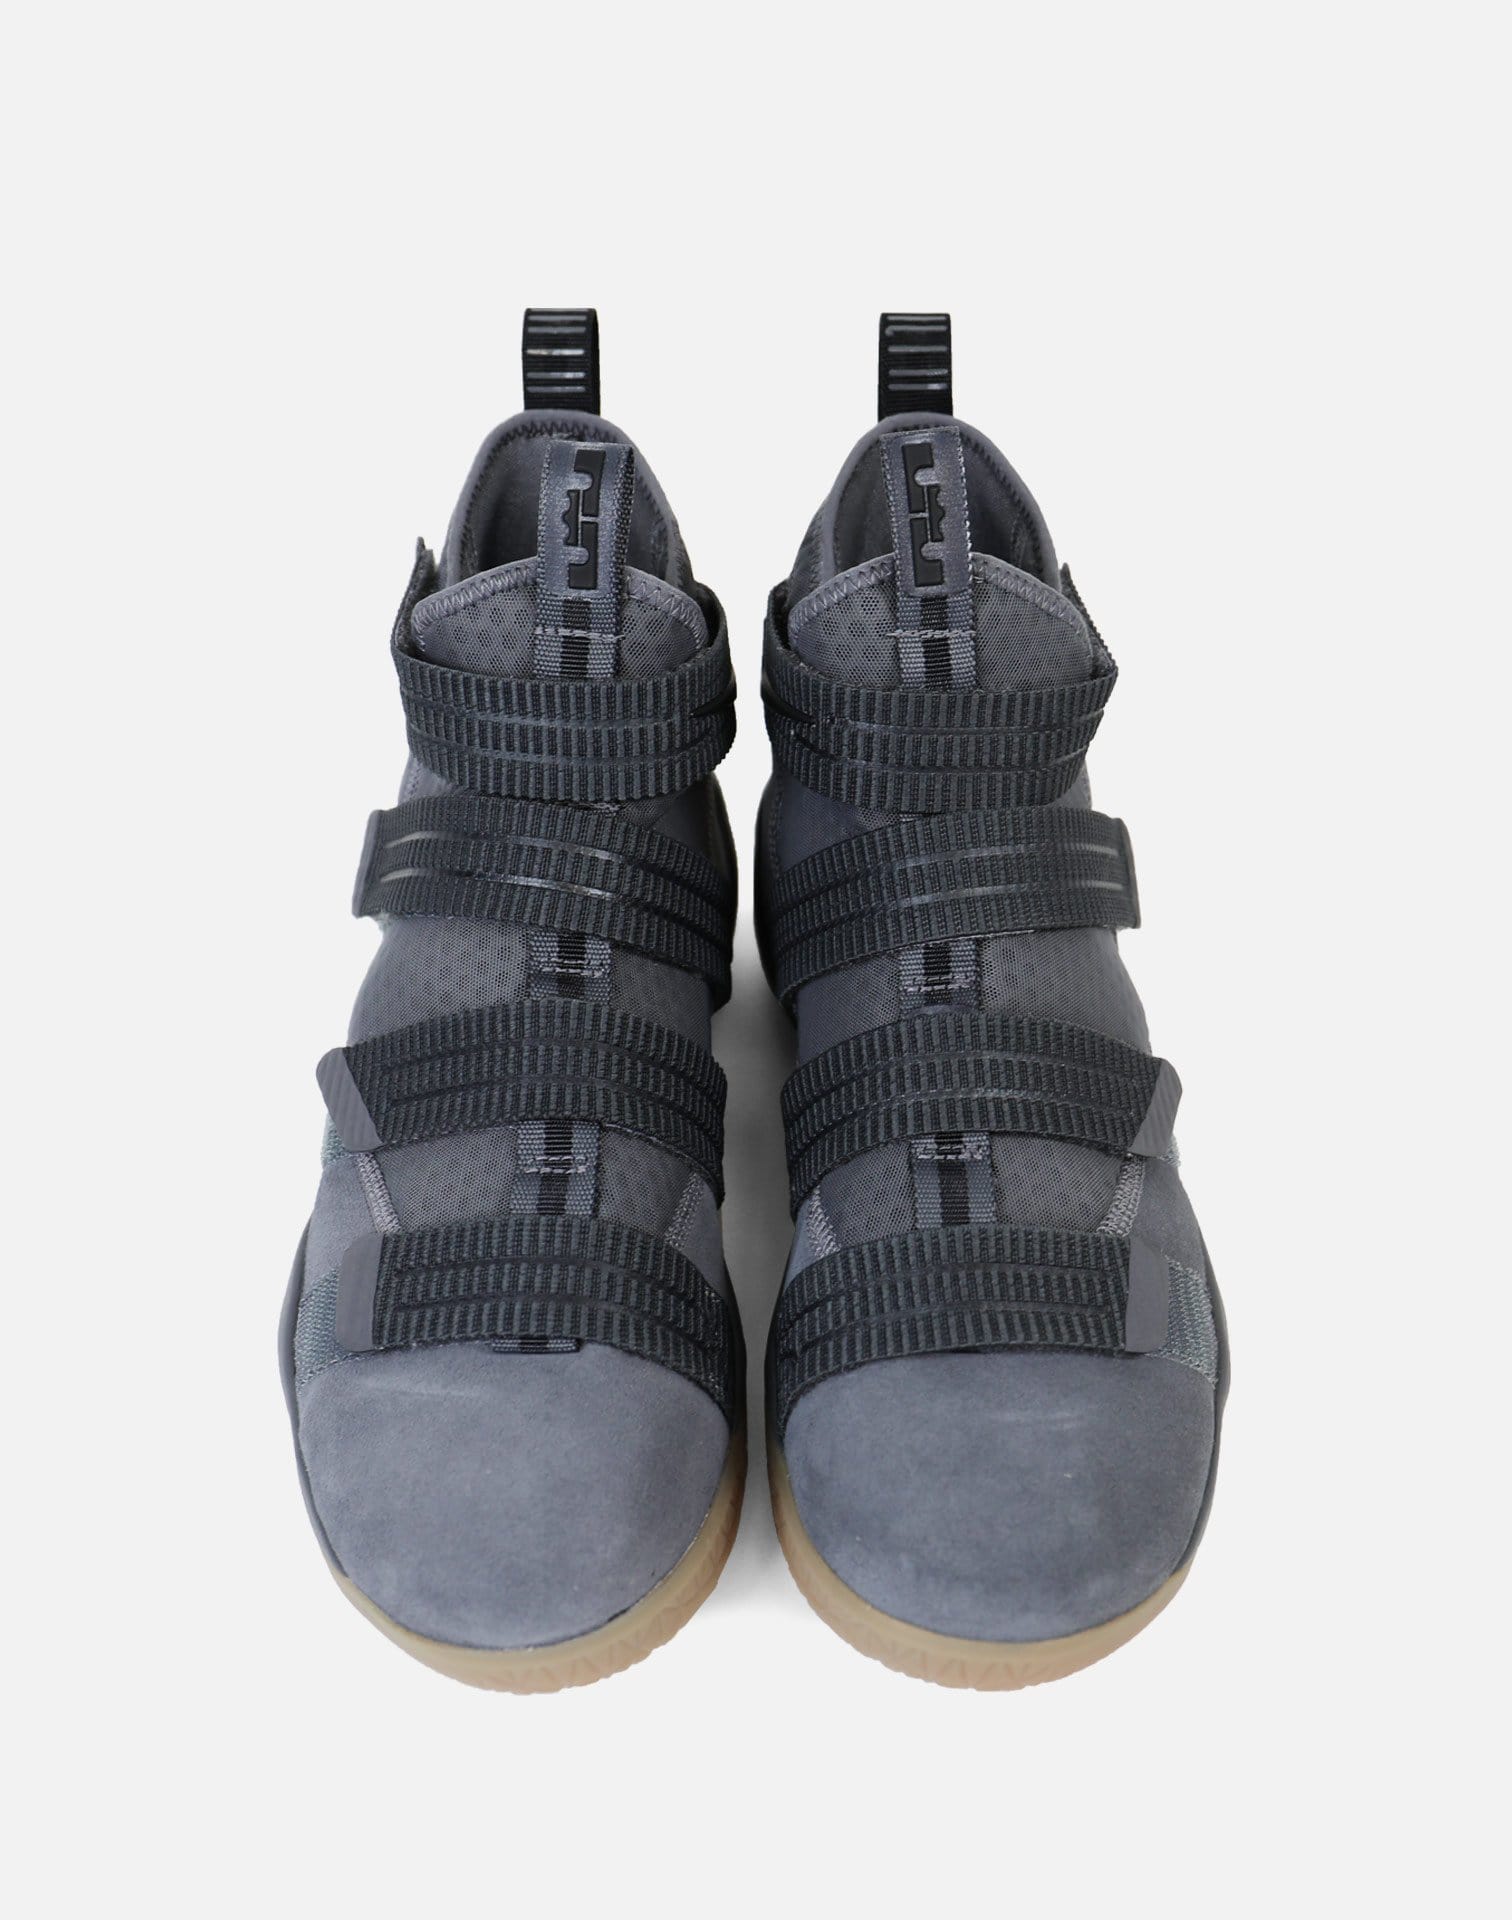 Nike Lebron XI SFG (Dark Grey/Gum Light Brown-Black)